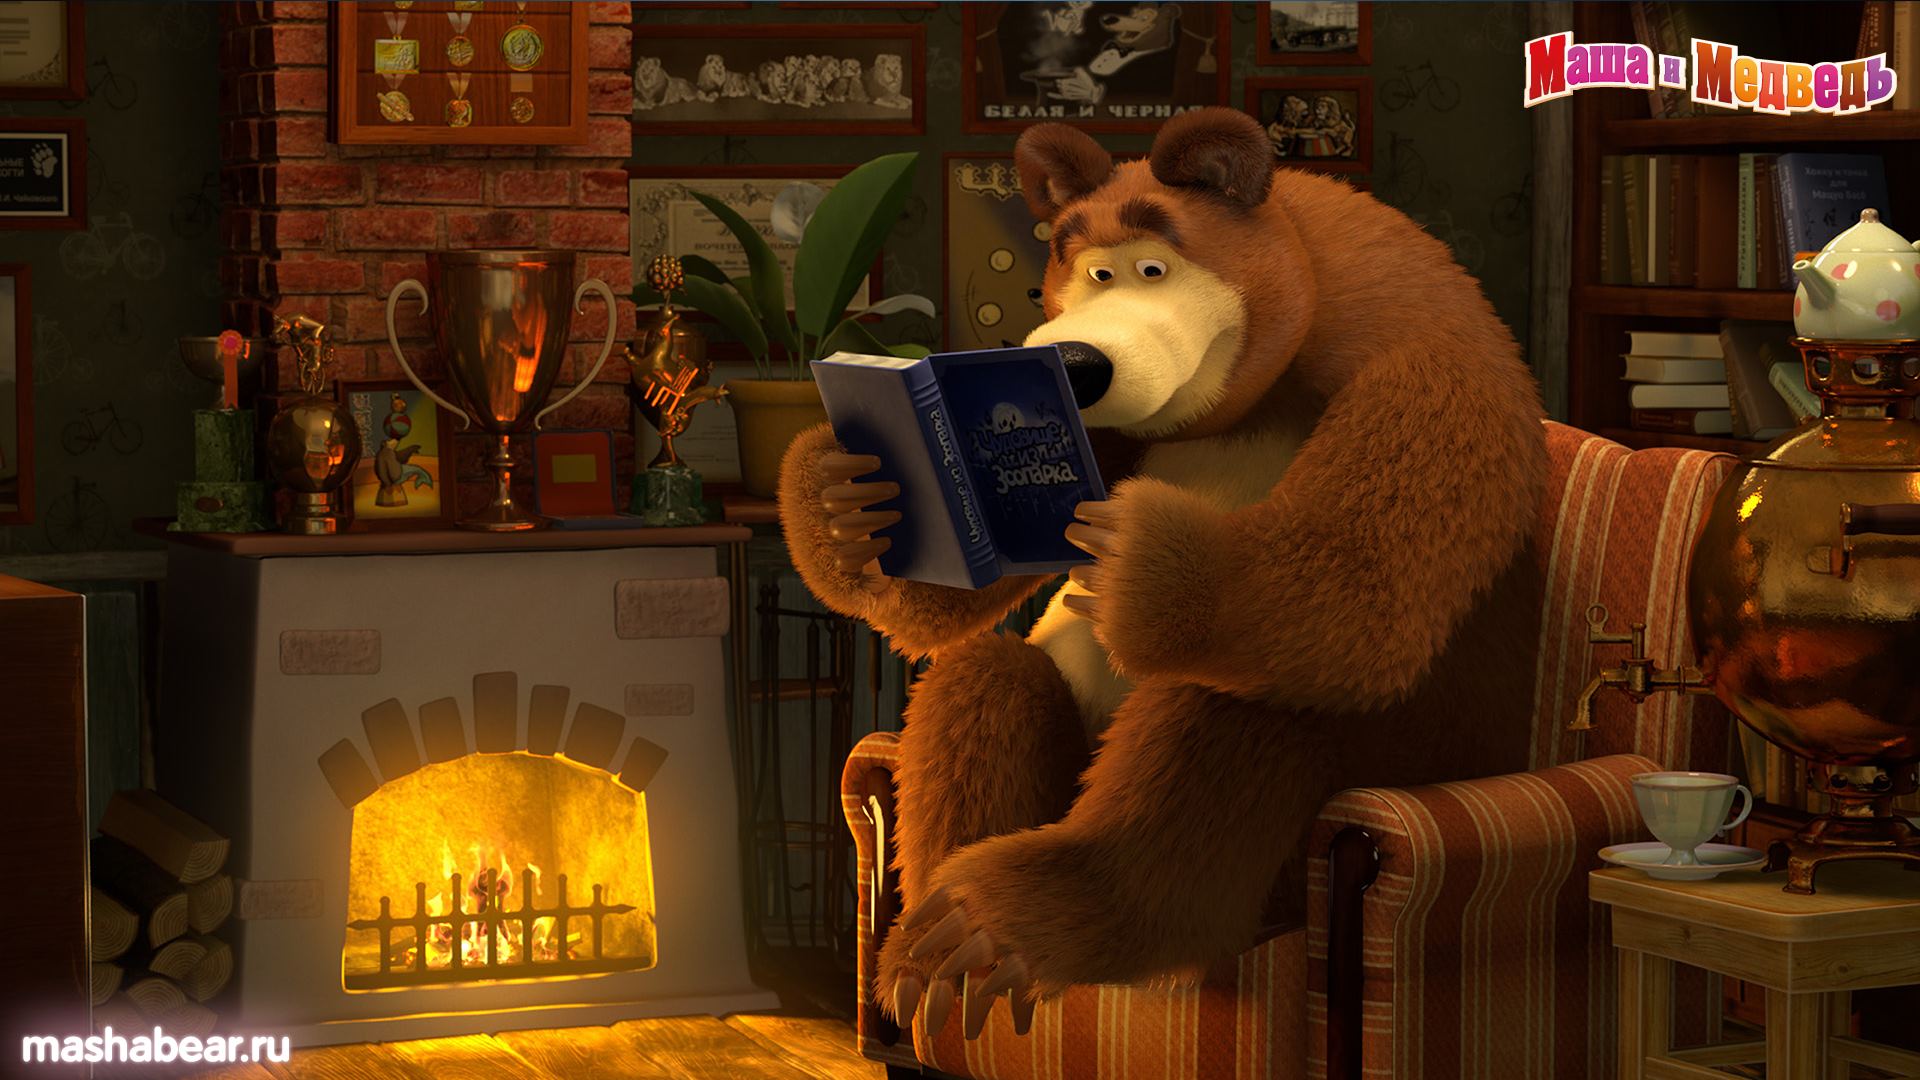 Маша и медведь phonk histed. Маша и медведь 2009. Медведь с мультфильма Маша и медведь. Маша и медведь чтение.